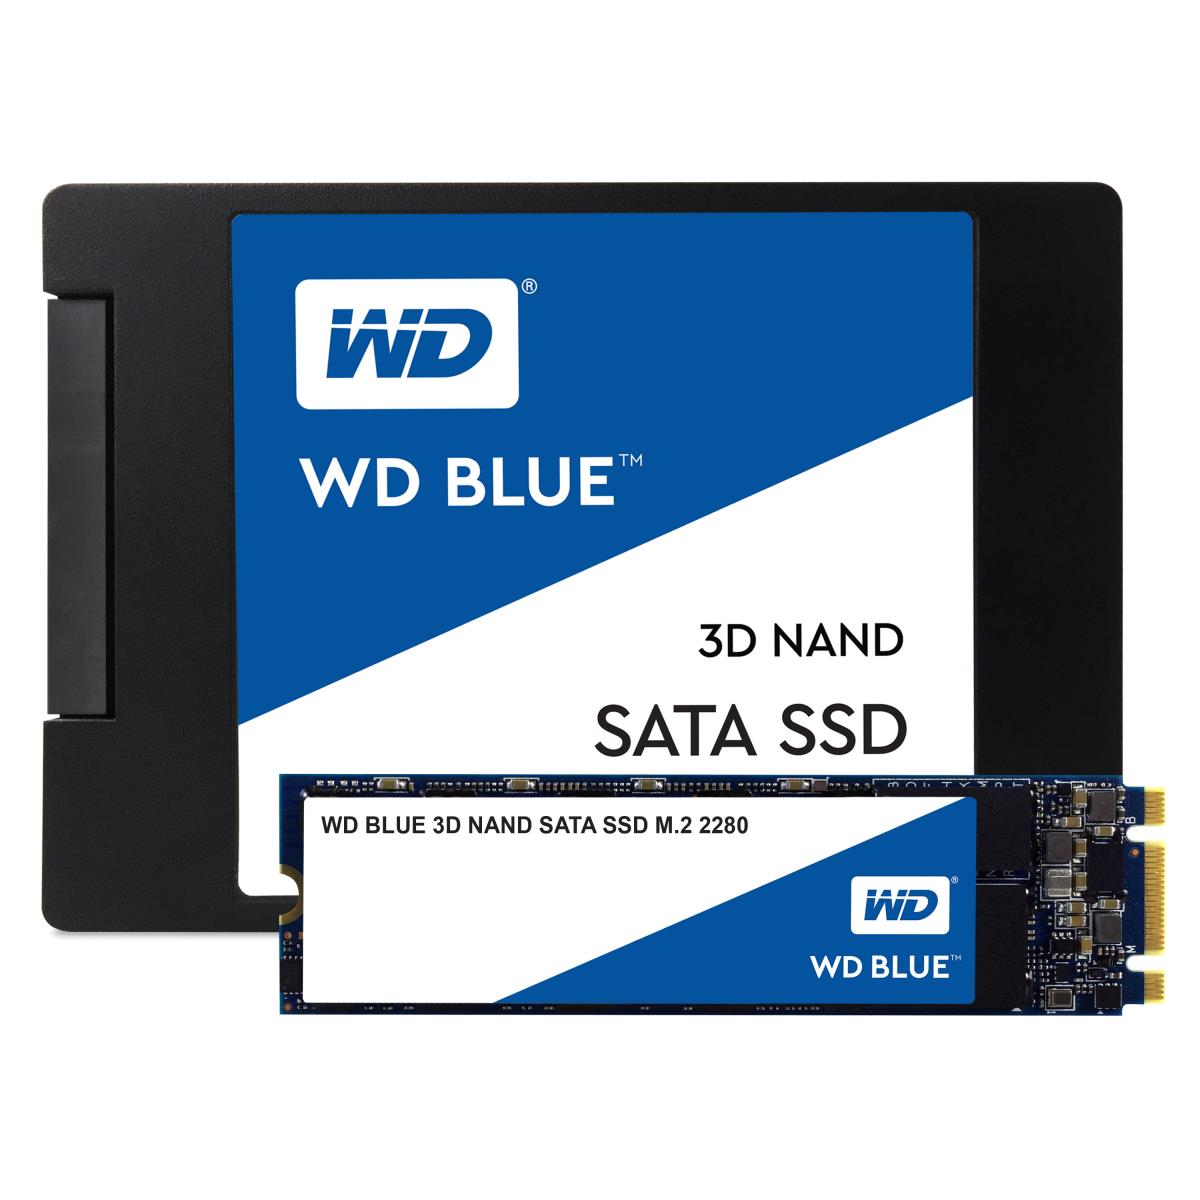 Western Digital SSD WD Blue SA510 2 To - 2.5